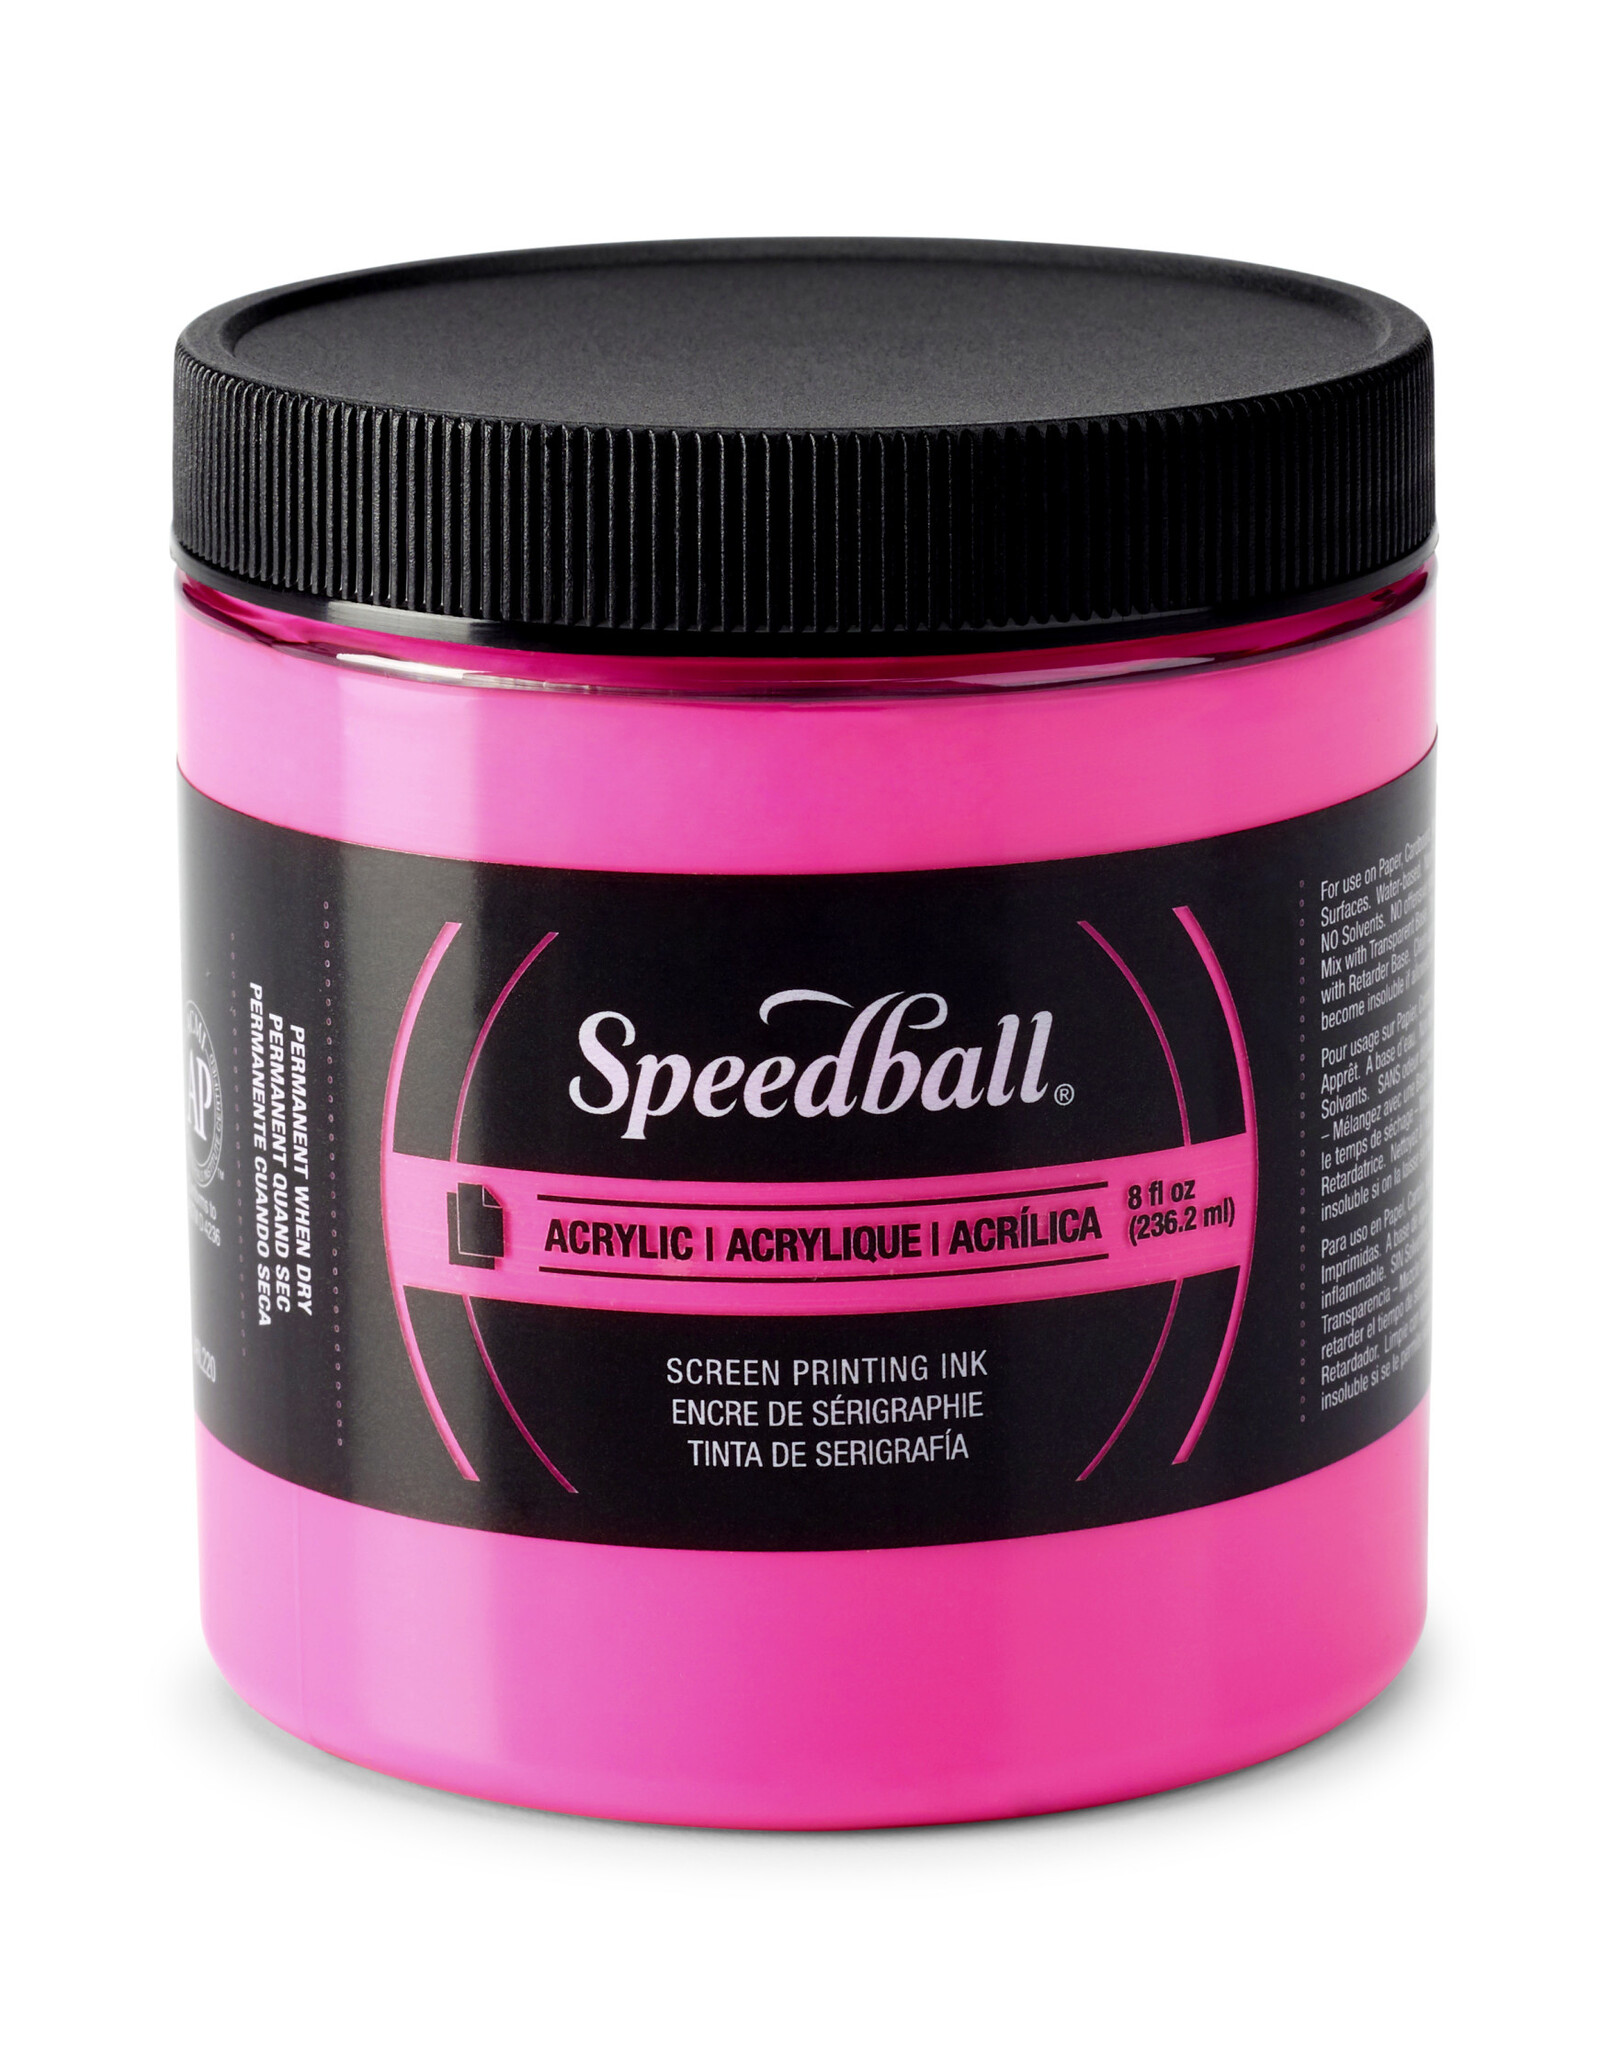 SPEEDBALL ART PRODUCTS Speedball Acrylic Screen Printing Ink, Fluorescent Magenta, 8oz